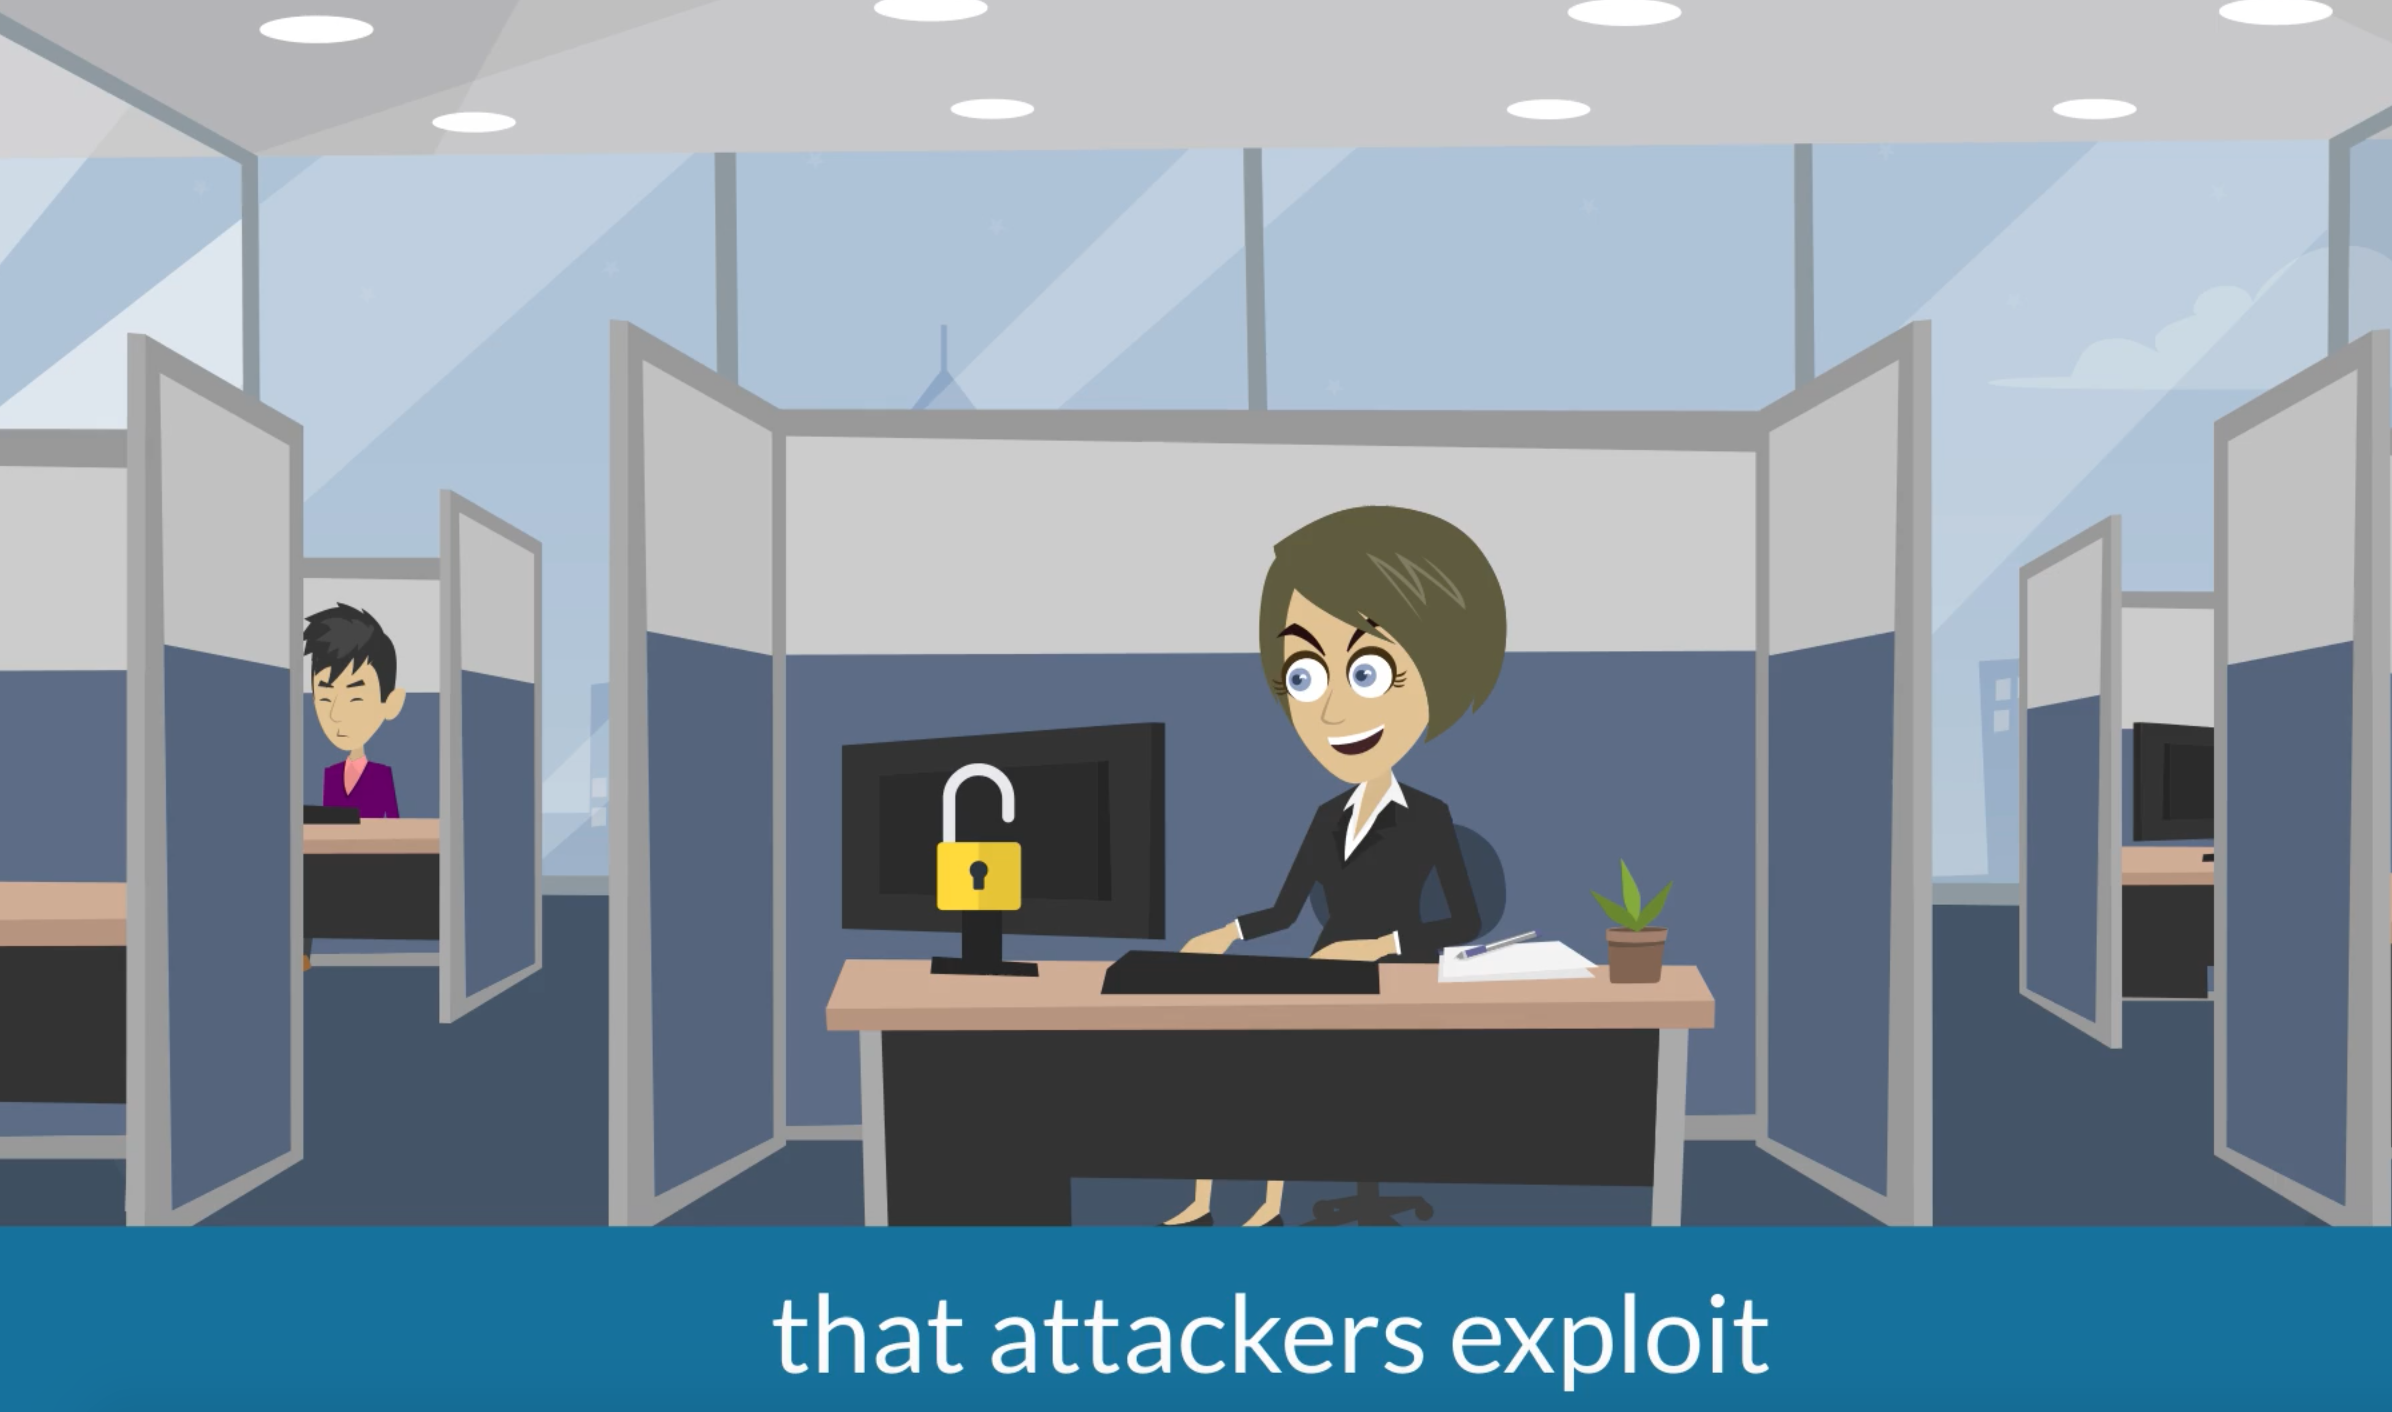 Attackers exploit human vulnerabilities